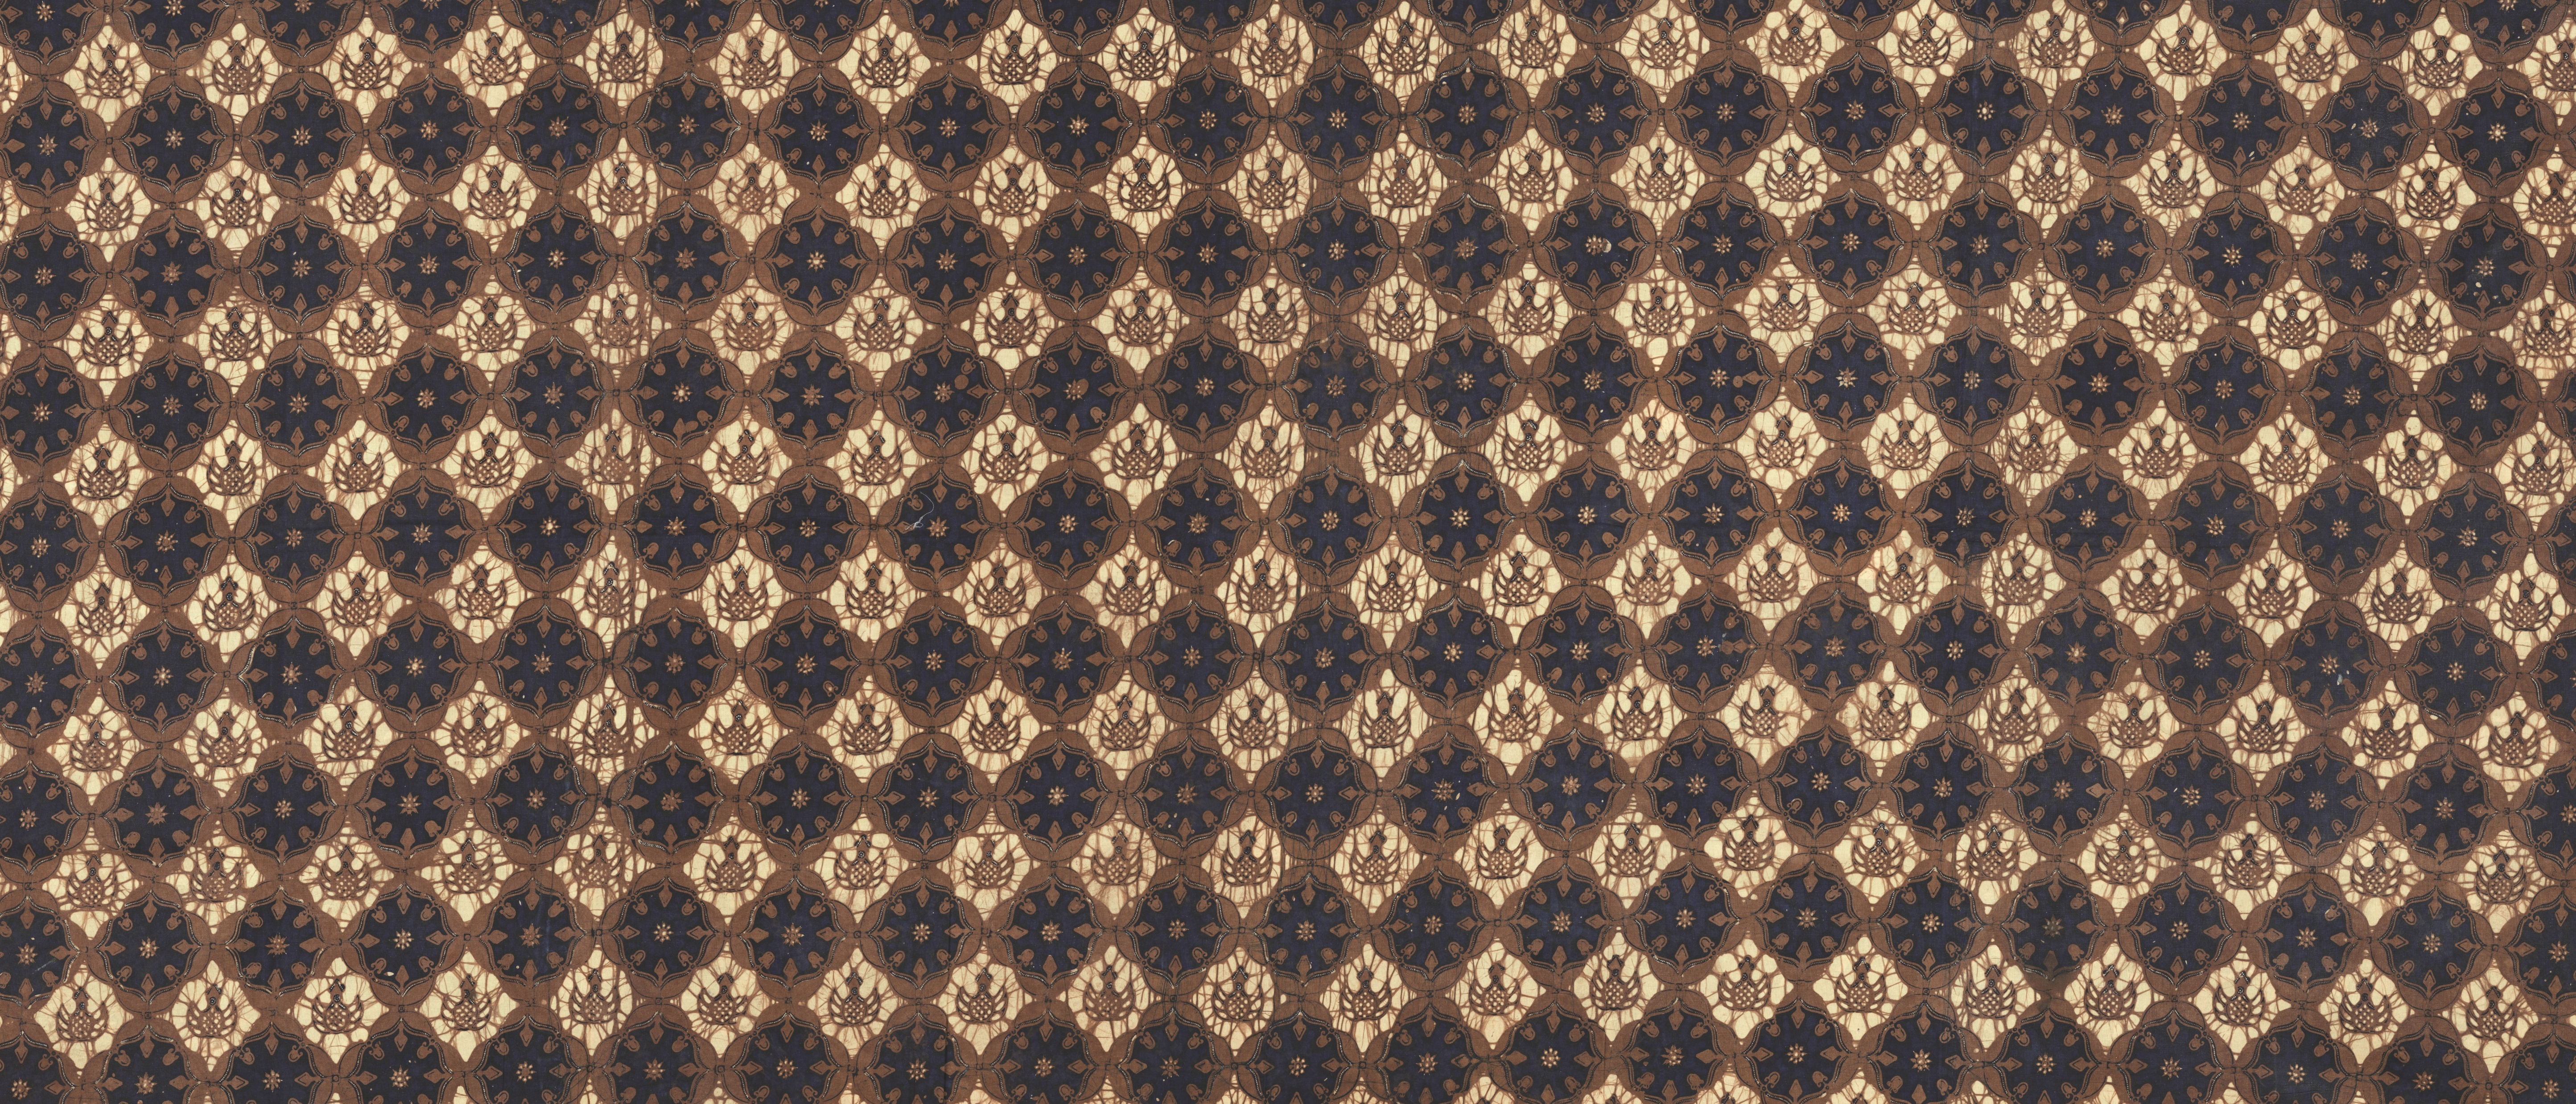 Texture Fabric Geometric Figures Ultrawide 5777x2476